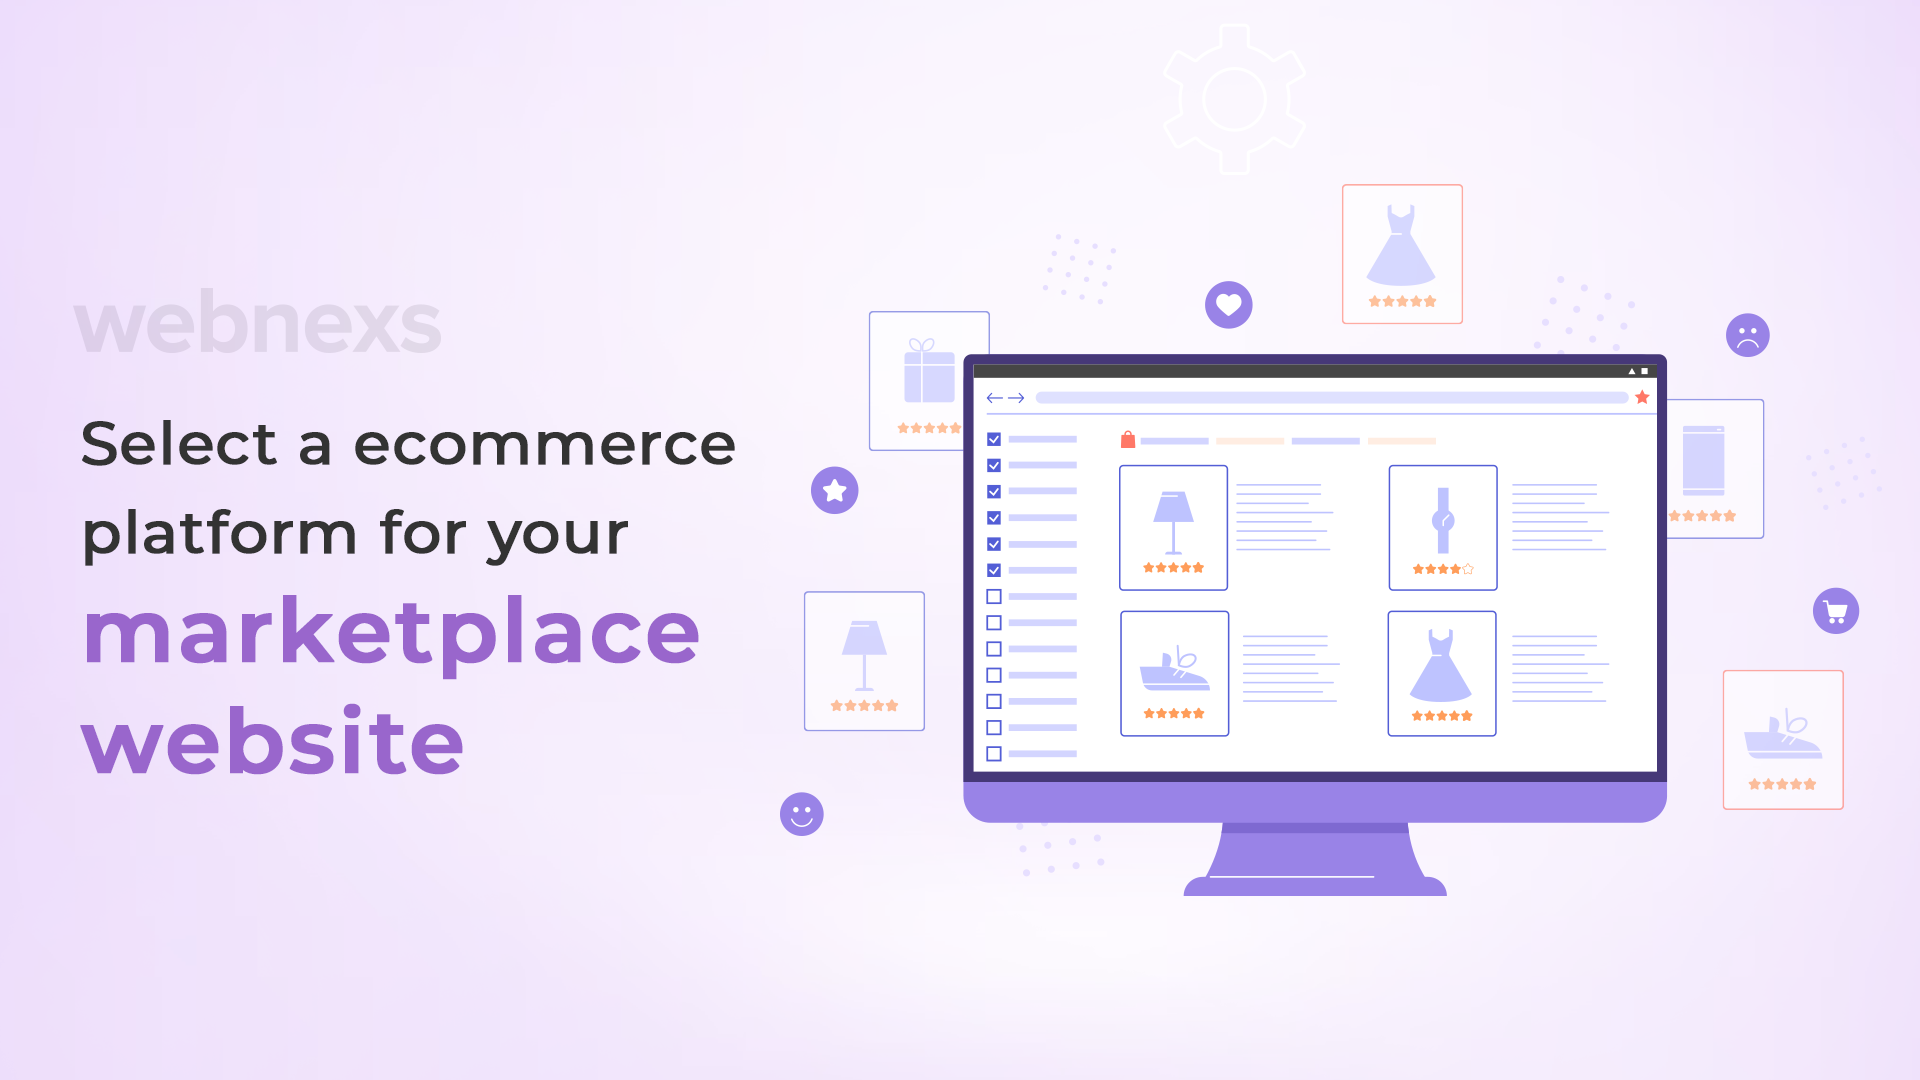 Step 02: Select a ecommerce platform for your marketplace website